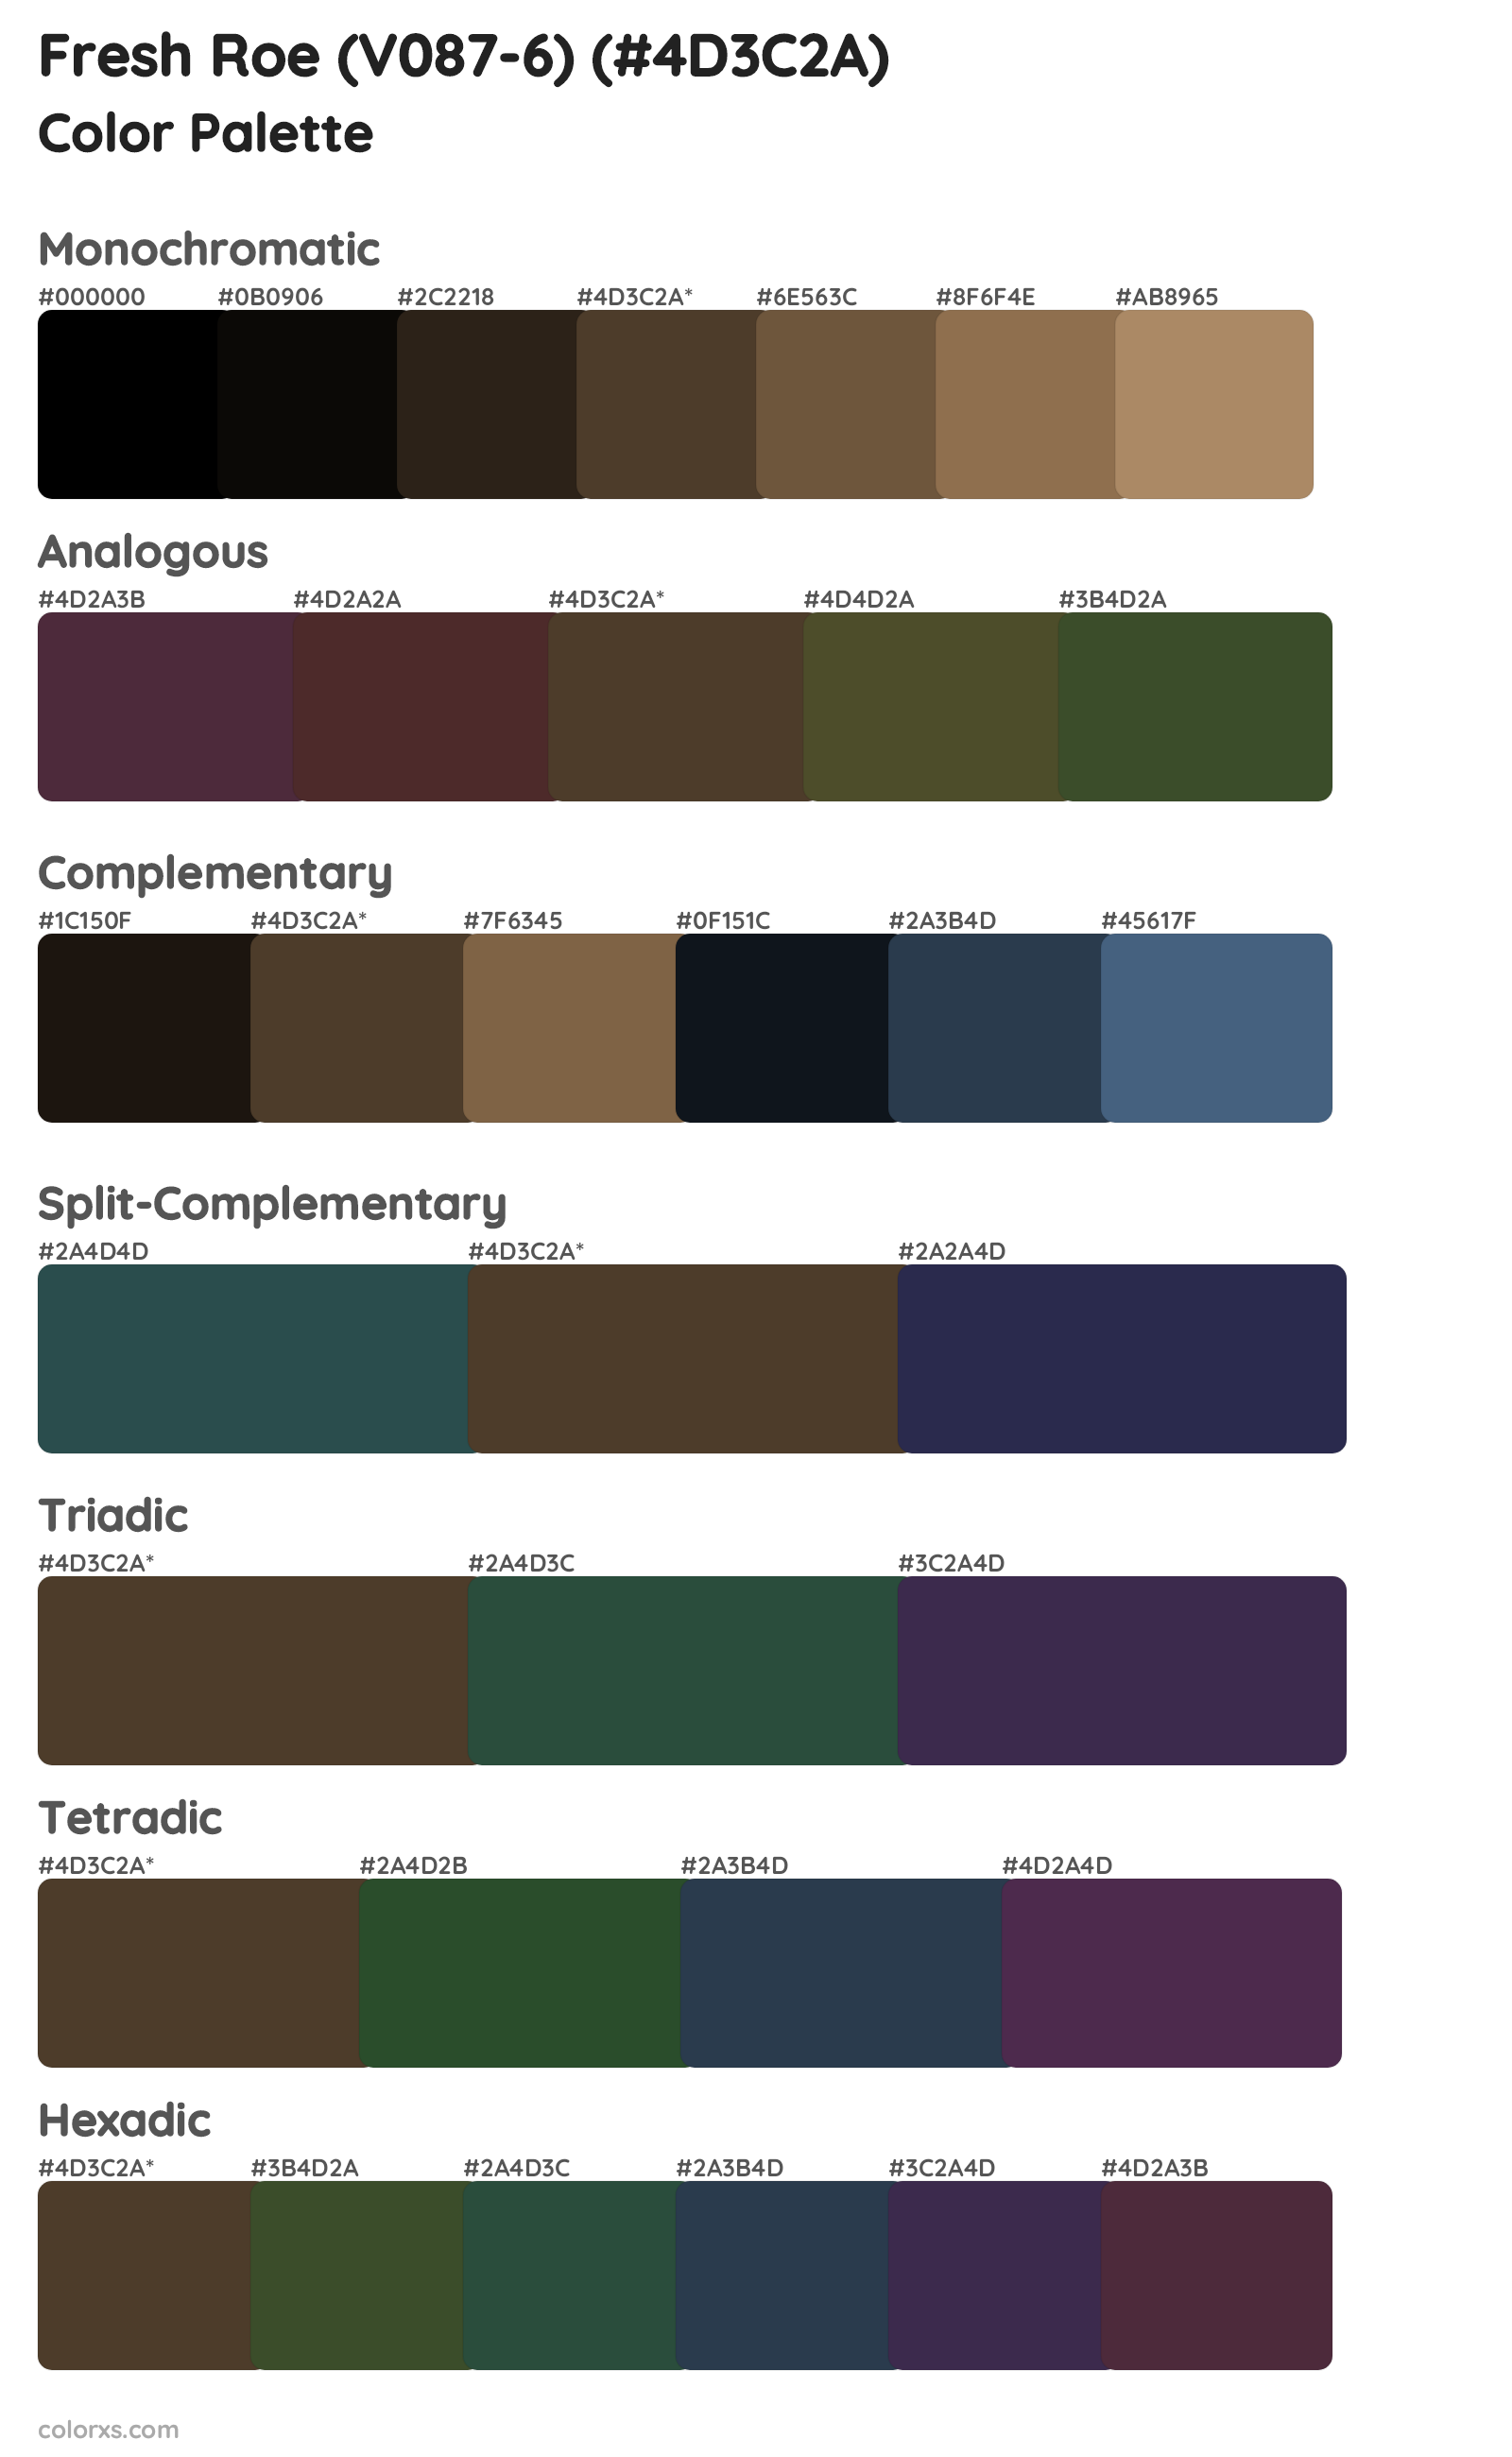 Fresh Roe (V087-6) Color Scheme Palettes